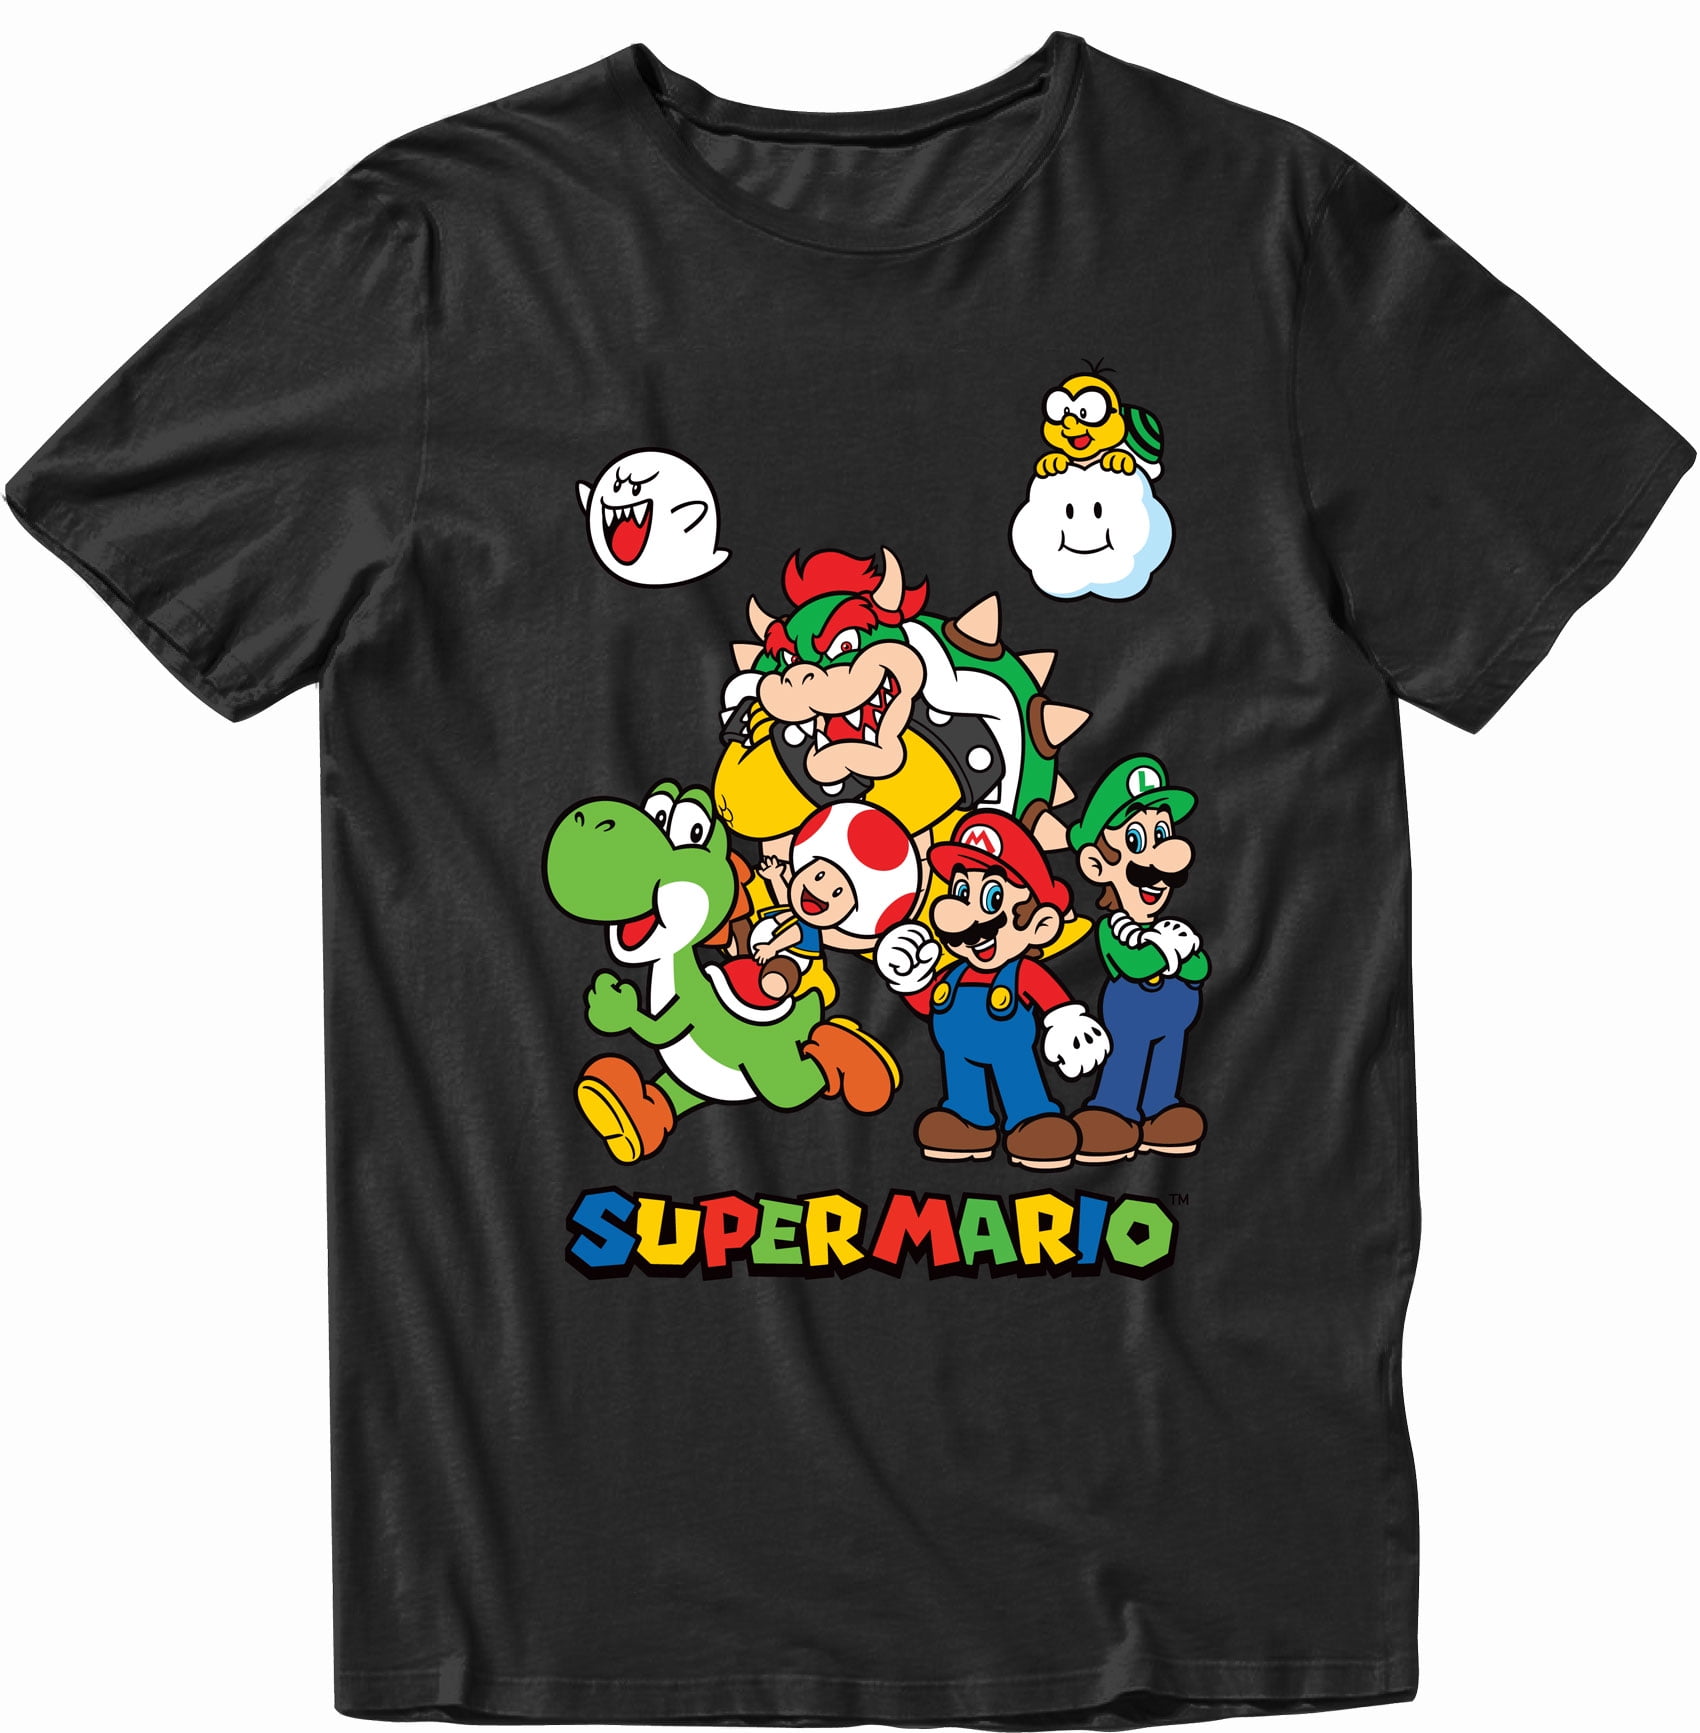 Pygmalion billede Synes godt om Nintendo Video Game Super Mario Classic Group Adult T-Shirt (Large, Black)  - Walmart.com